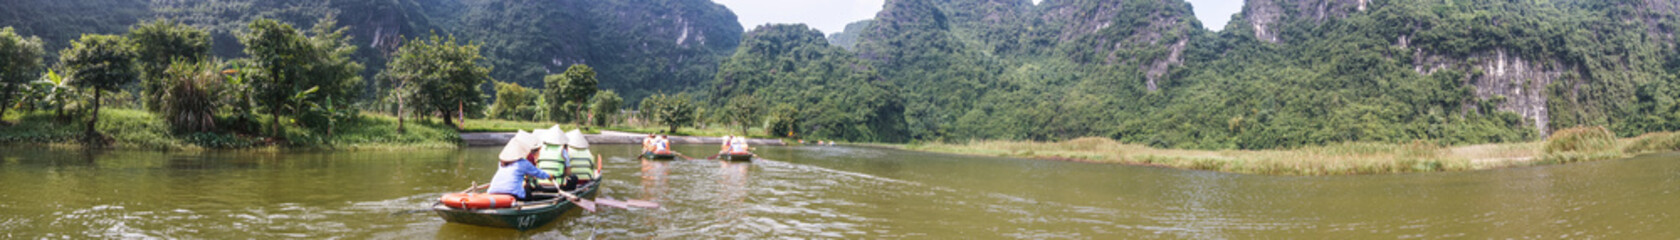 Boote auf dem Fluß Hanoi Vietnam Panorama